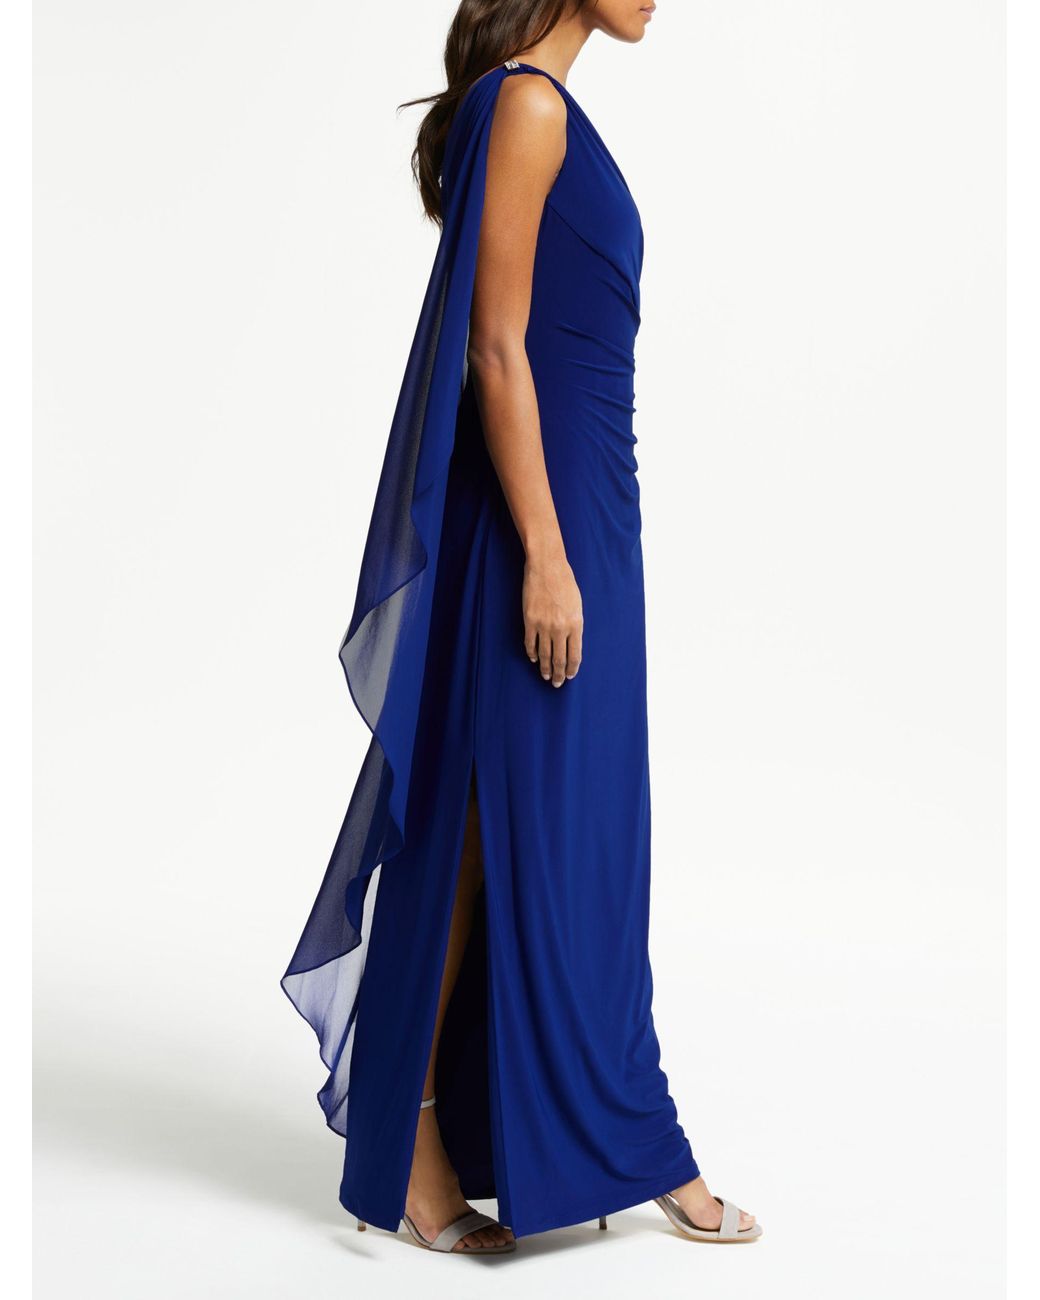 Ralph Lauren Lauren Lisella One Shoulder Dress in Blue | Lyst UK